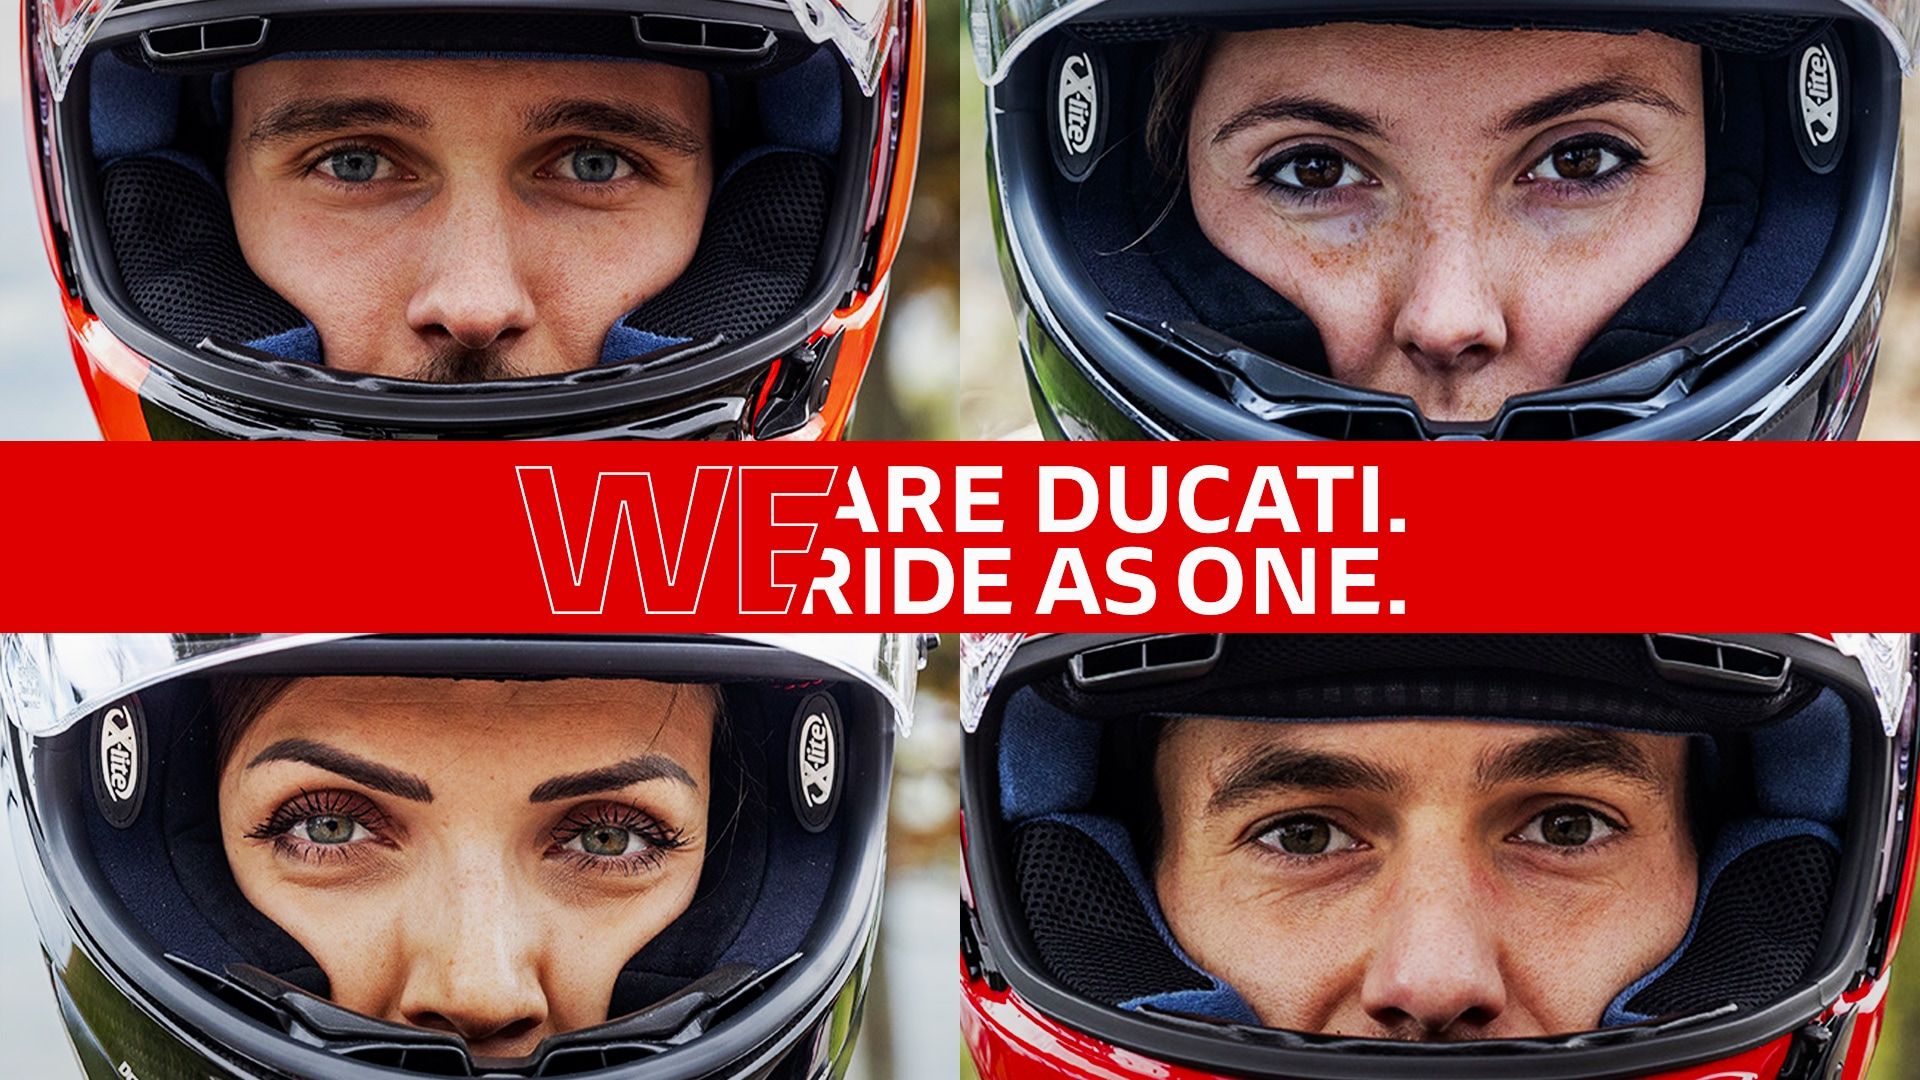 #WeRideAsOne: Ducatisti around the world meet to celebrate Ducati passion